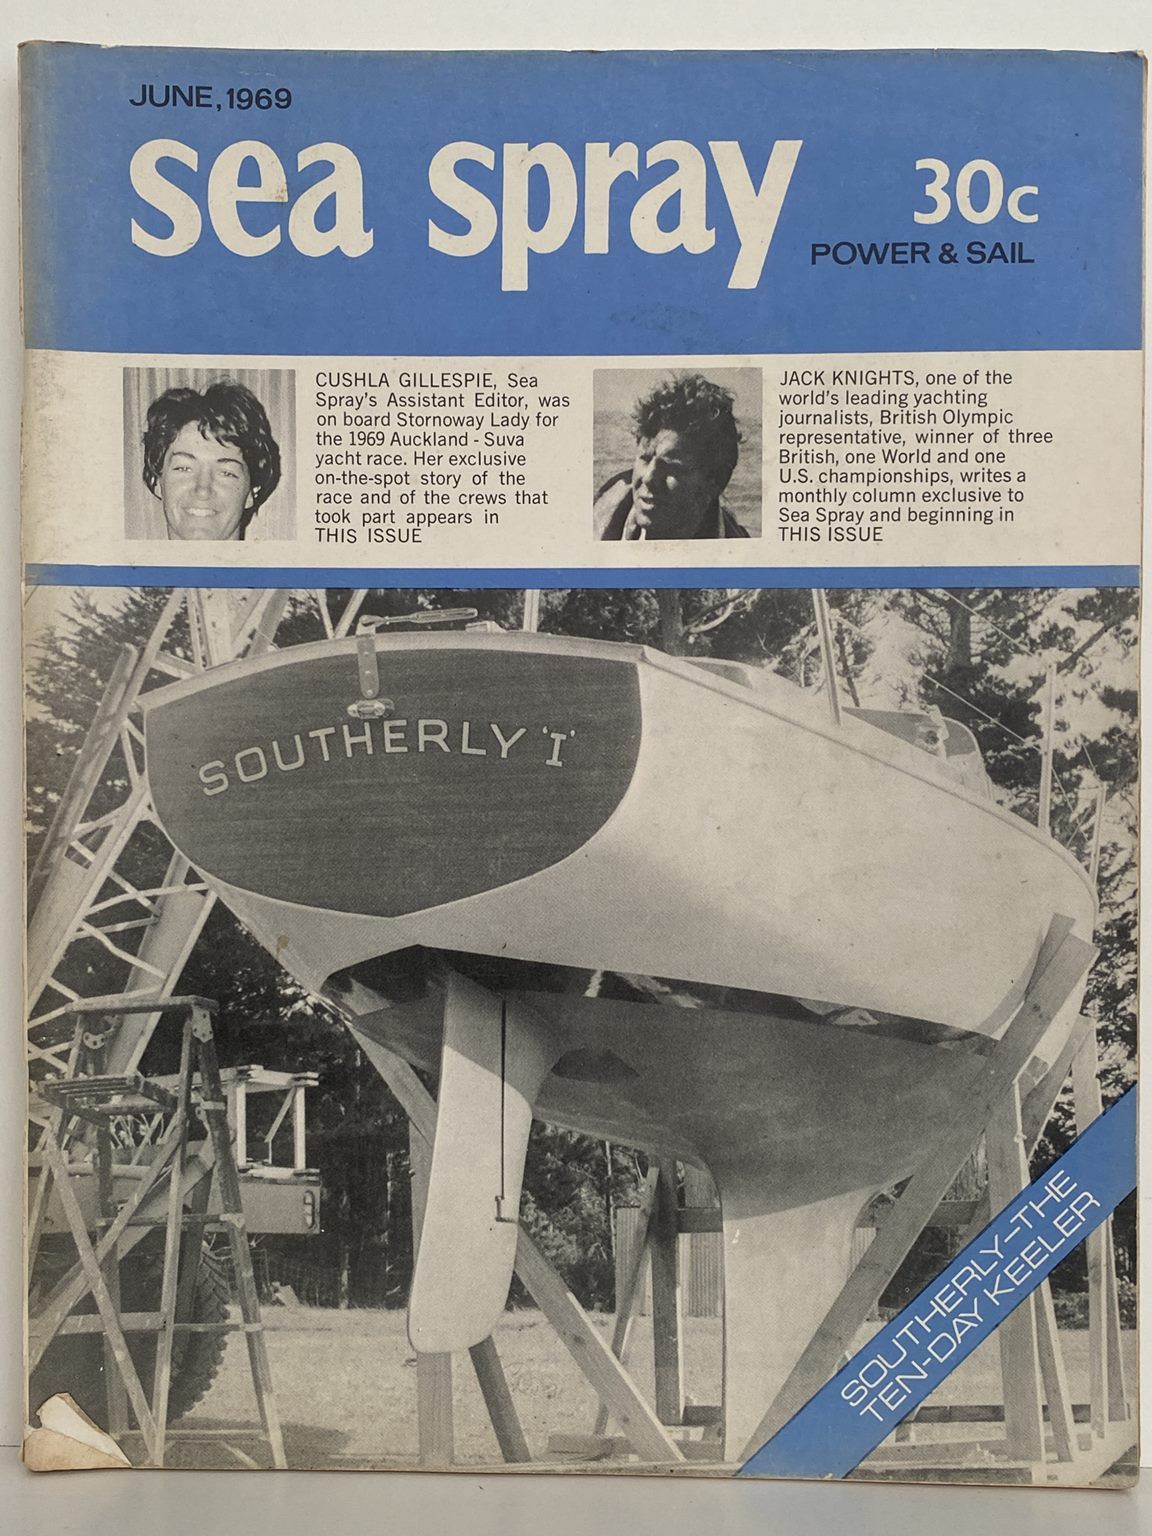 VINTAGE MAGAZINE: Sea Spray / Power & Sail - Vol. 24, No. 5 - June 1969